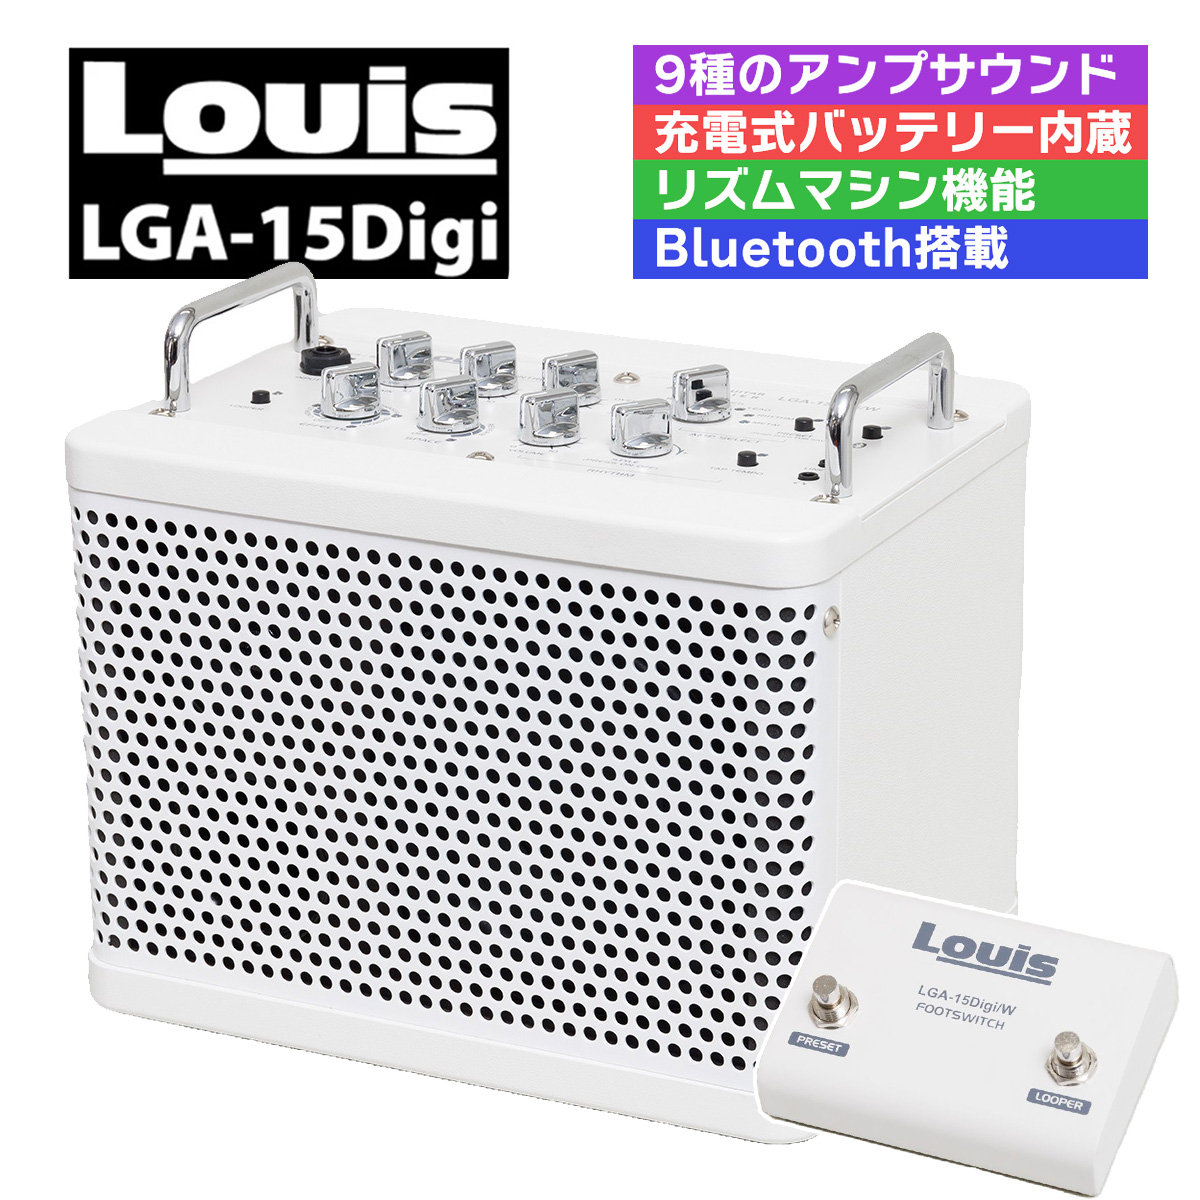 Louis LGA-15Digi/W ギターアンプ ホワイト 白 Bluetooth・リズム ...